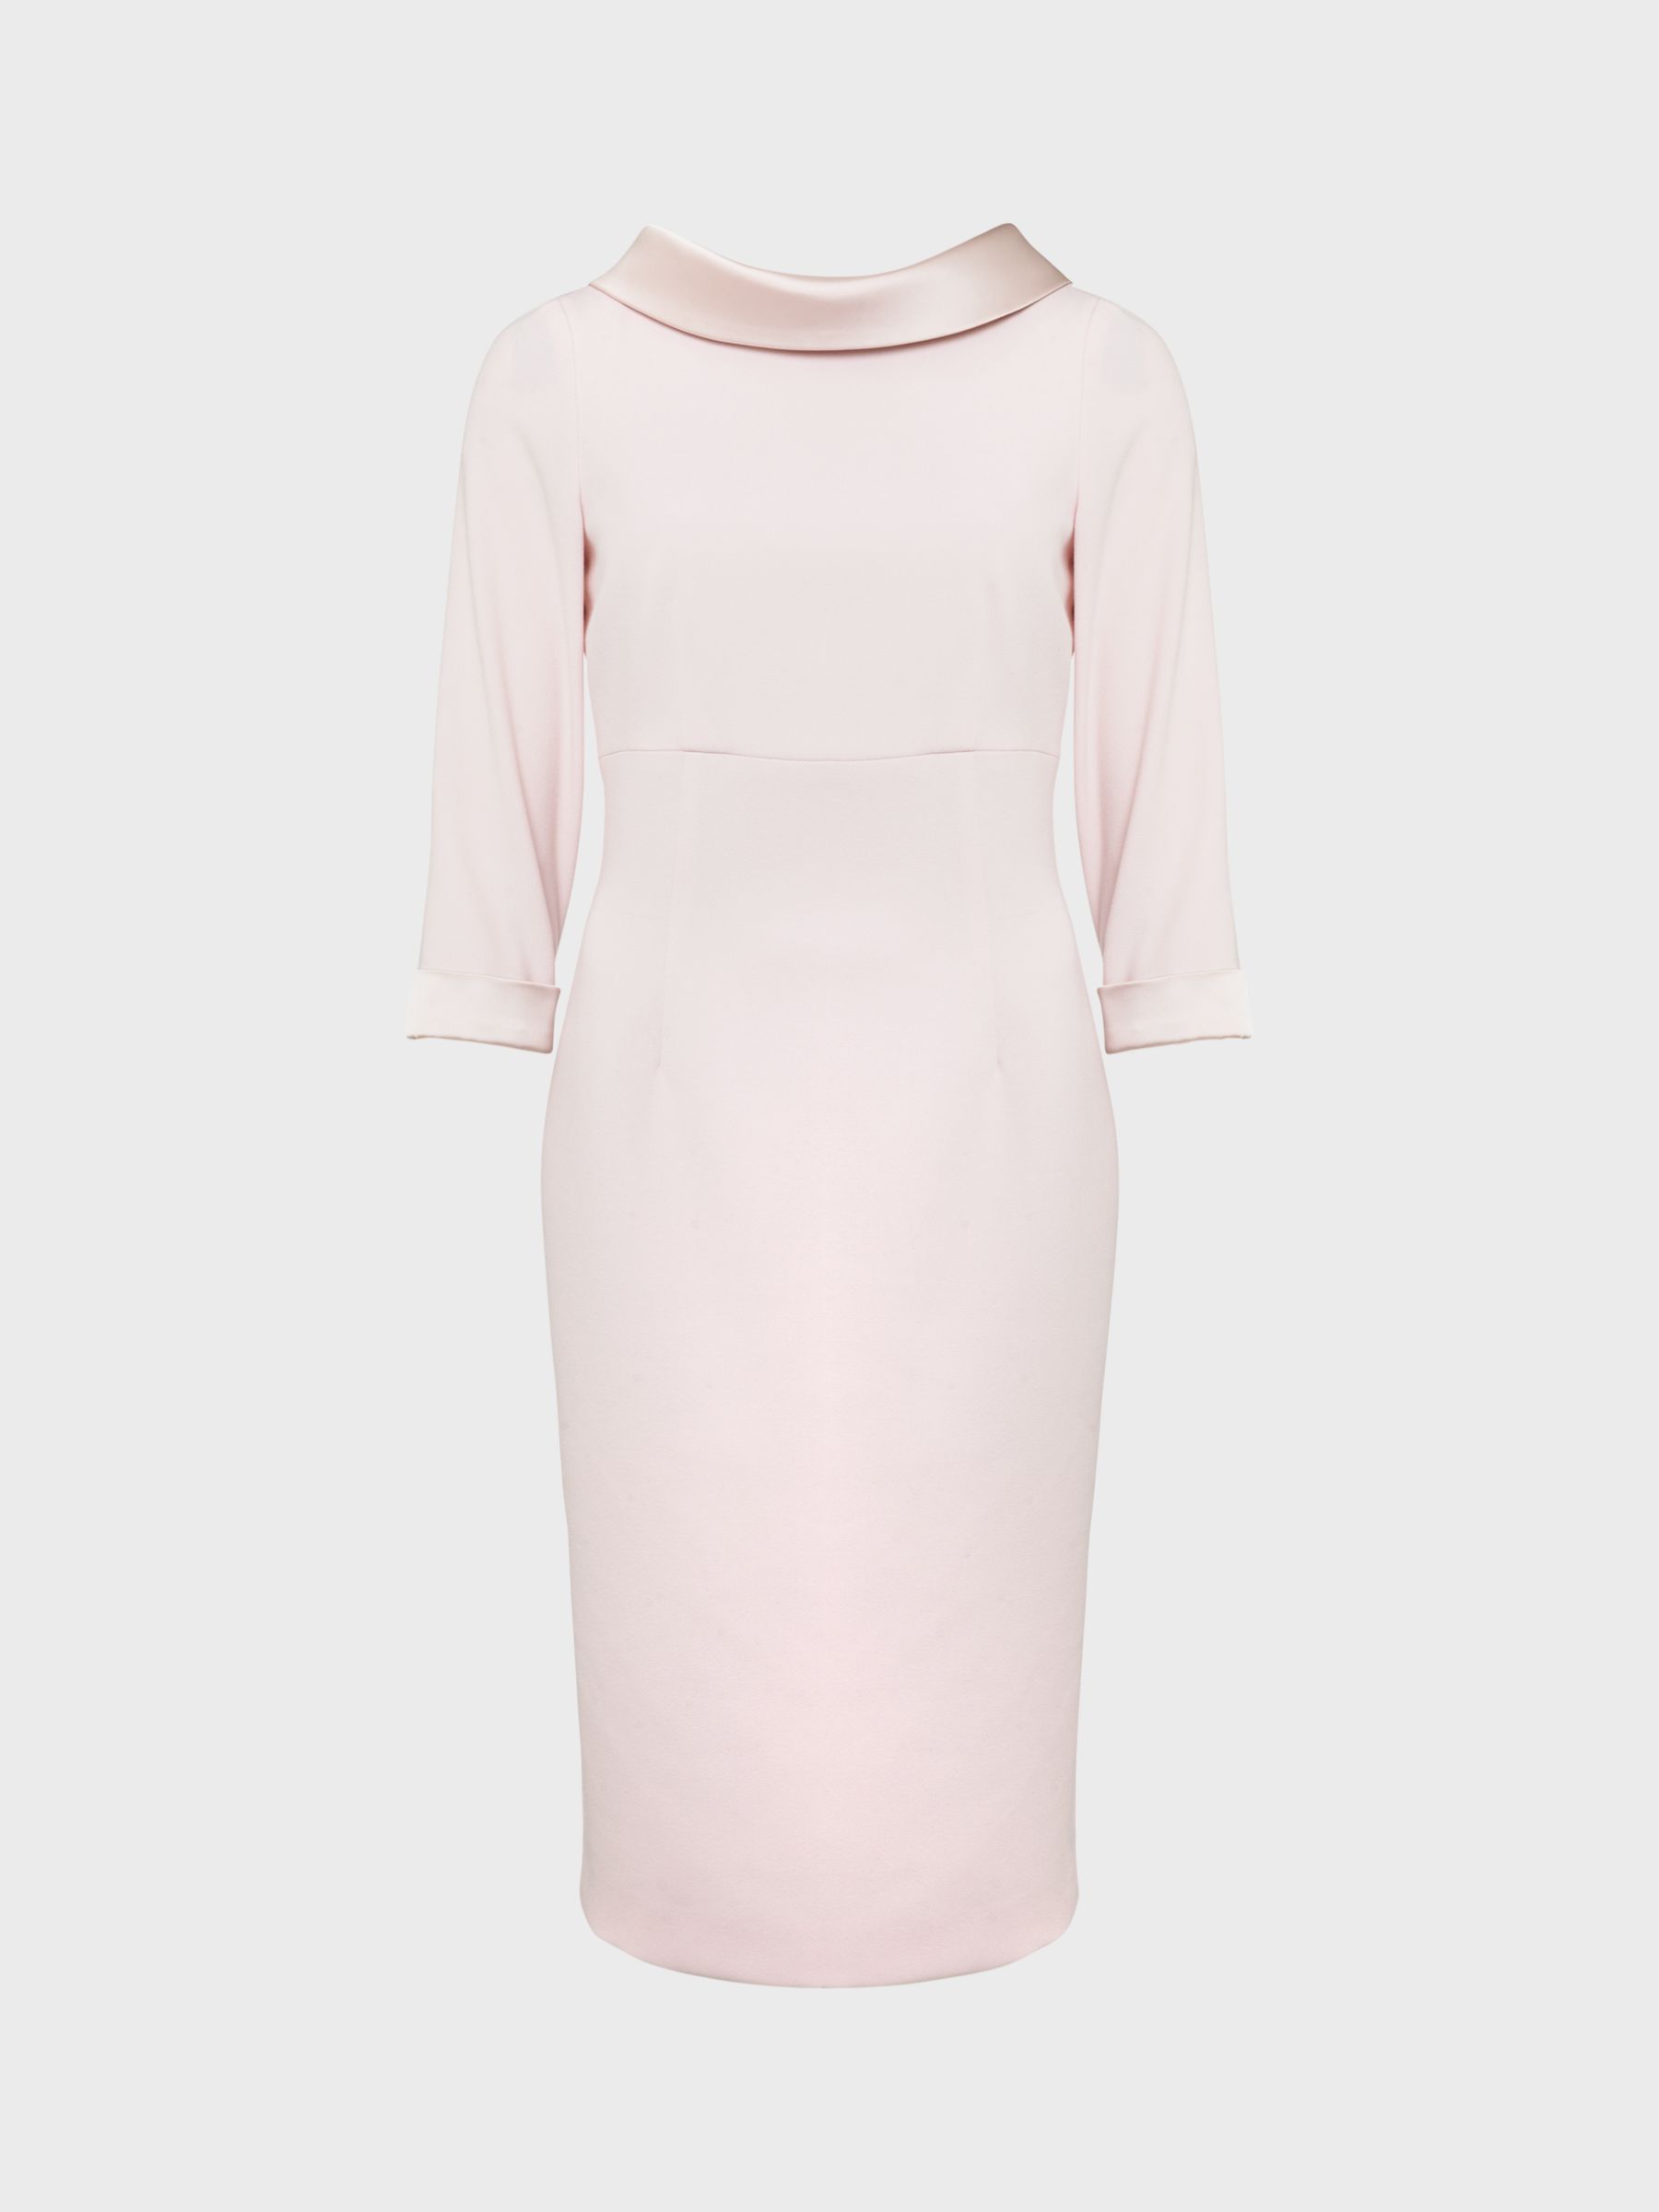 Hobbs Rhianne Shift Dress, Pale Pink at John Lewis & Partners